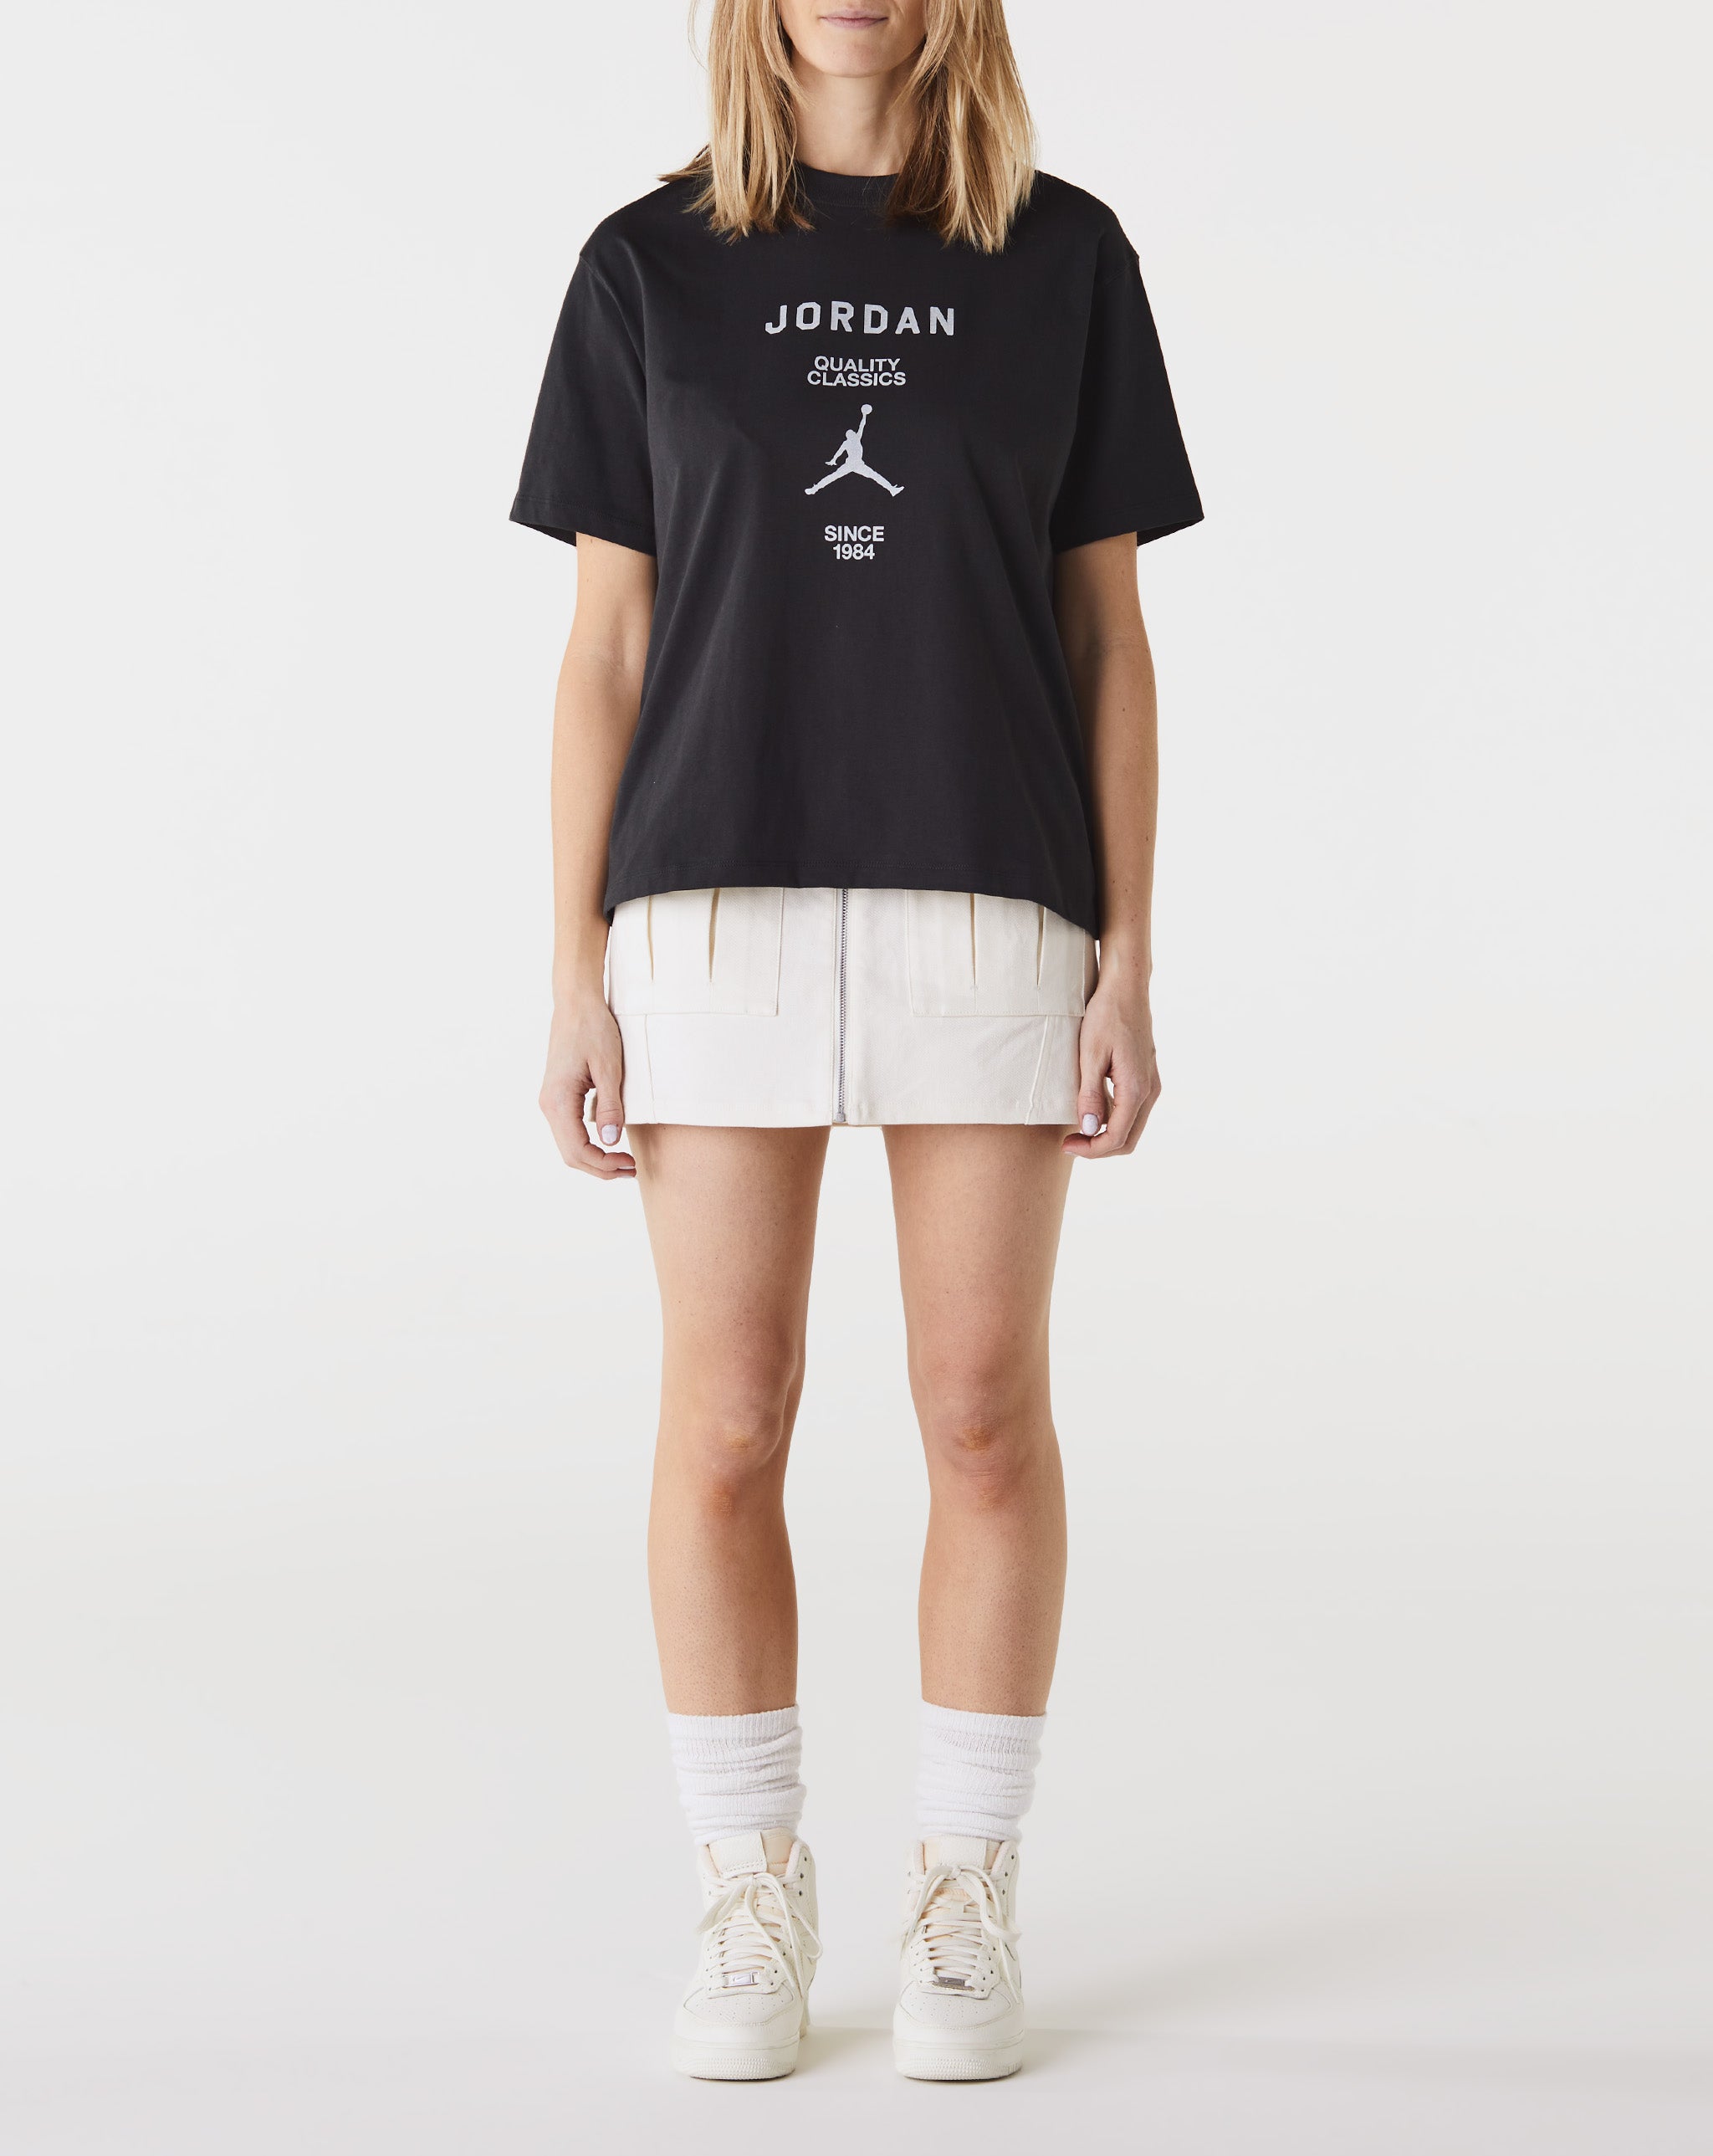 Air jordan the Women's jordan the Quality Classics T-Shirt  - Cheap 127-0 Jordan outlet